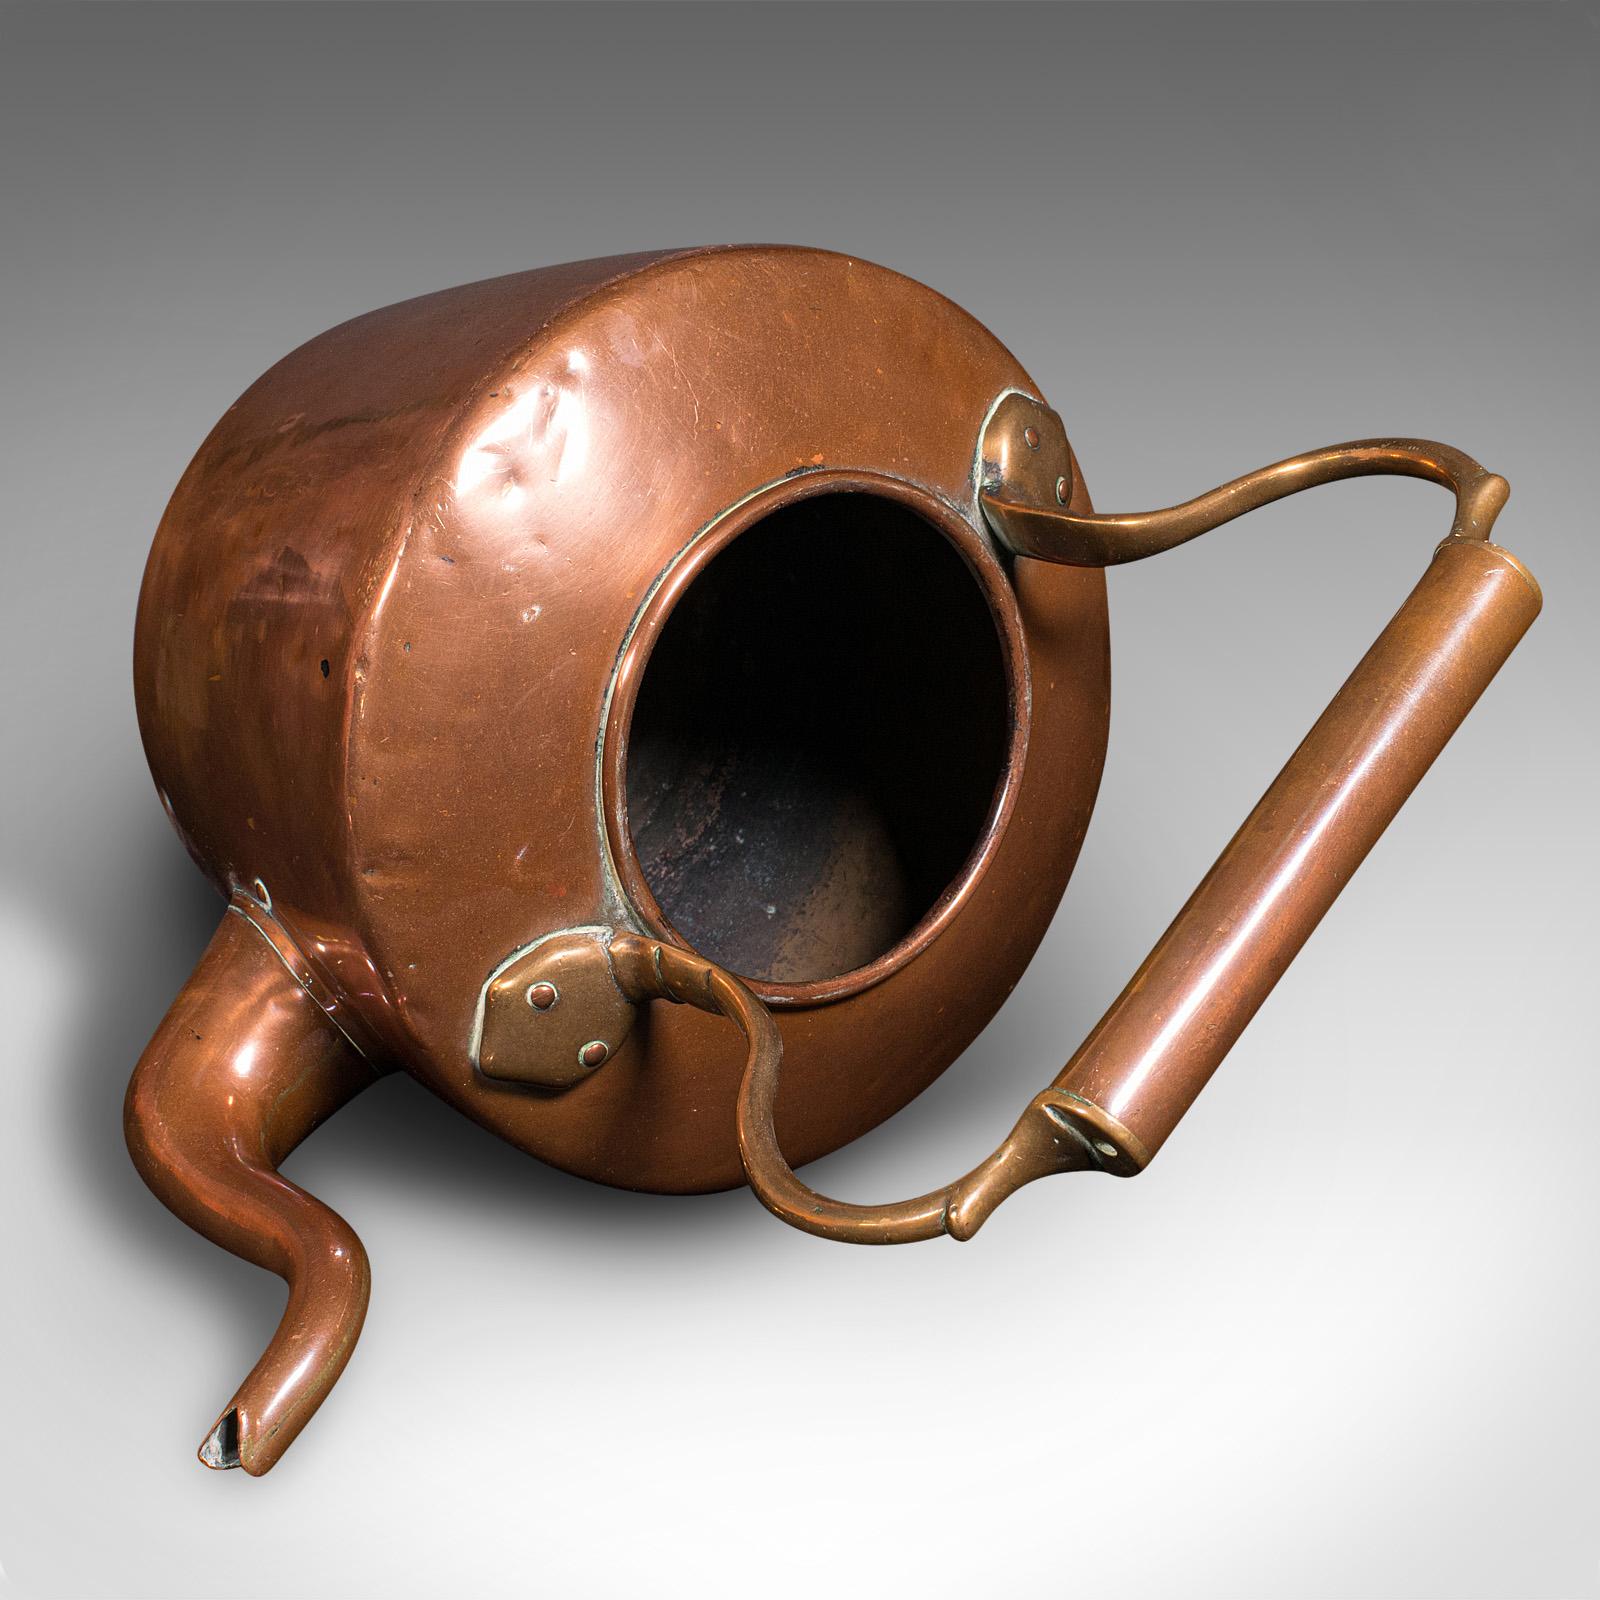 Antique Fireside Kettle, English Copper, Decorative, Fireplace Teapot, Victorian For Sale 1